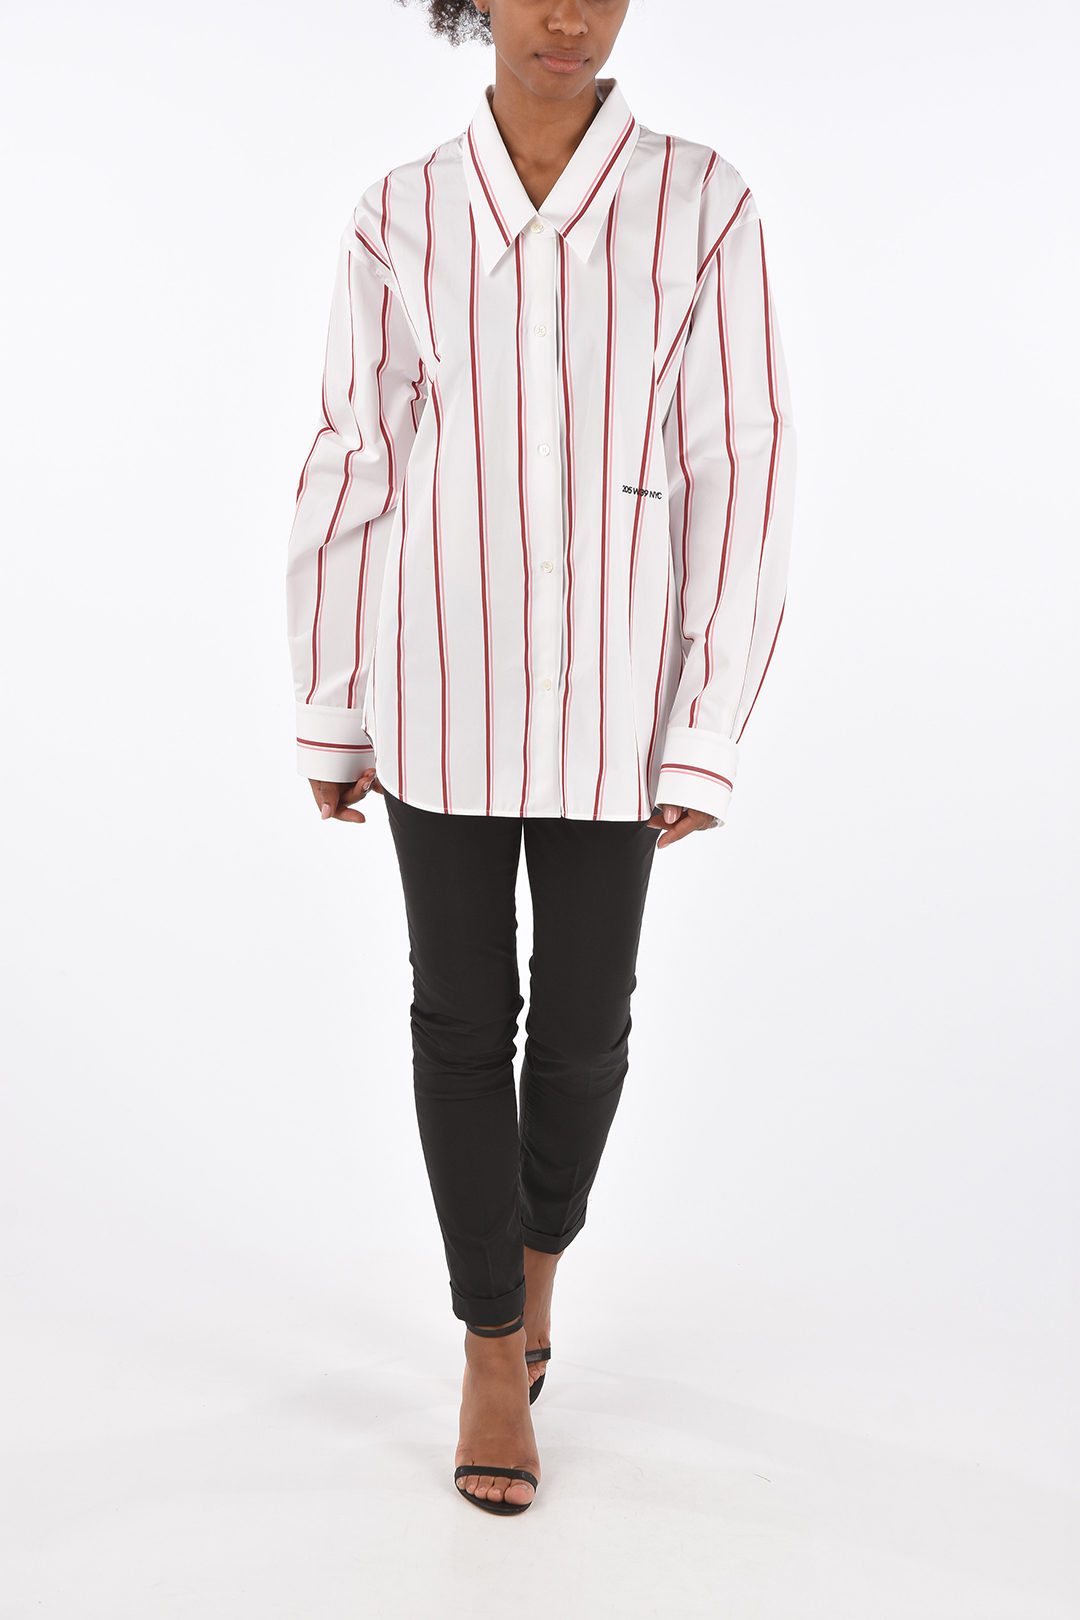 Calvin Klein 205W39NYC Striped Oversized Shirt women - Glamood Outlet